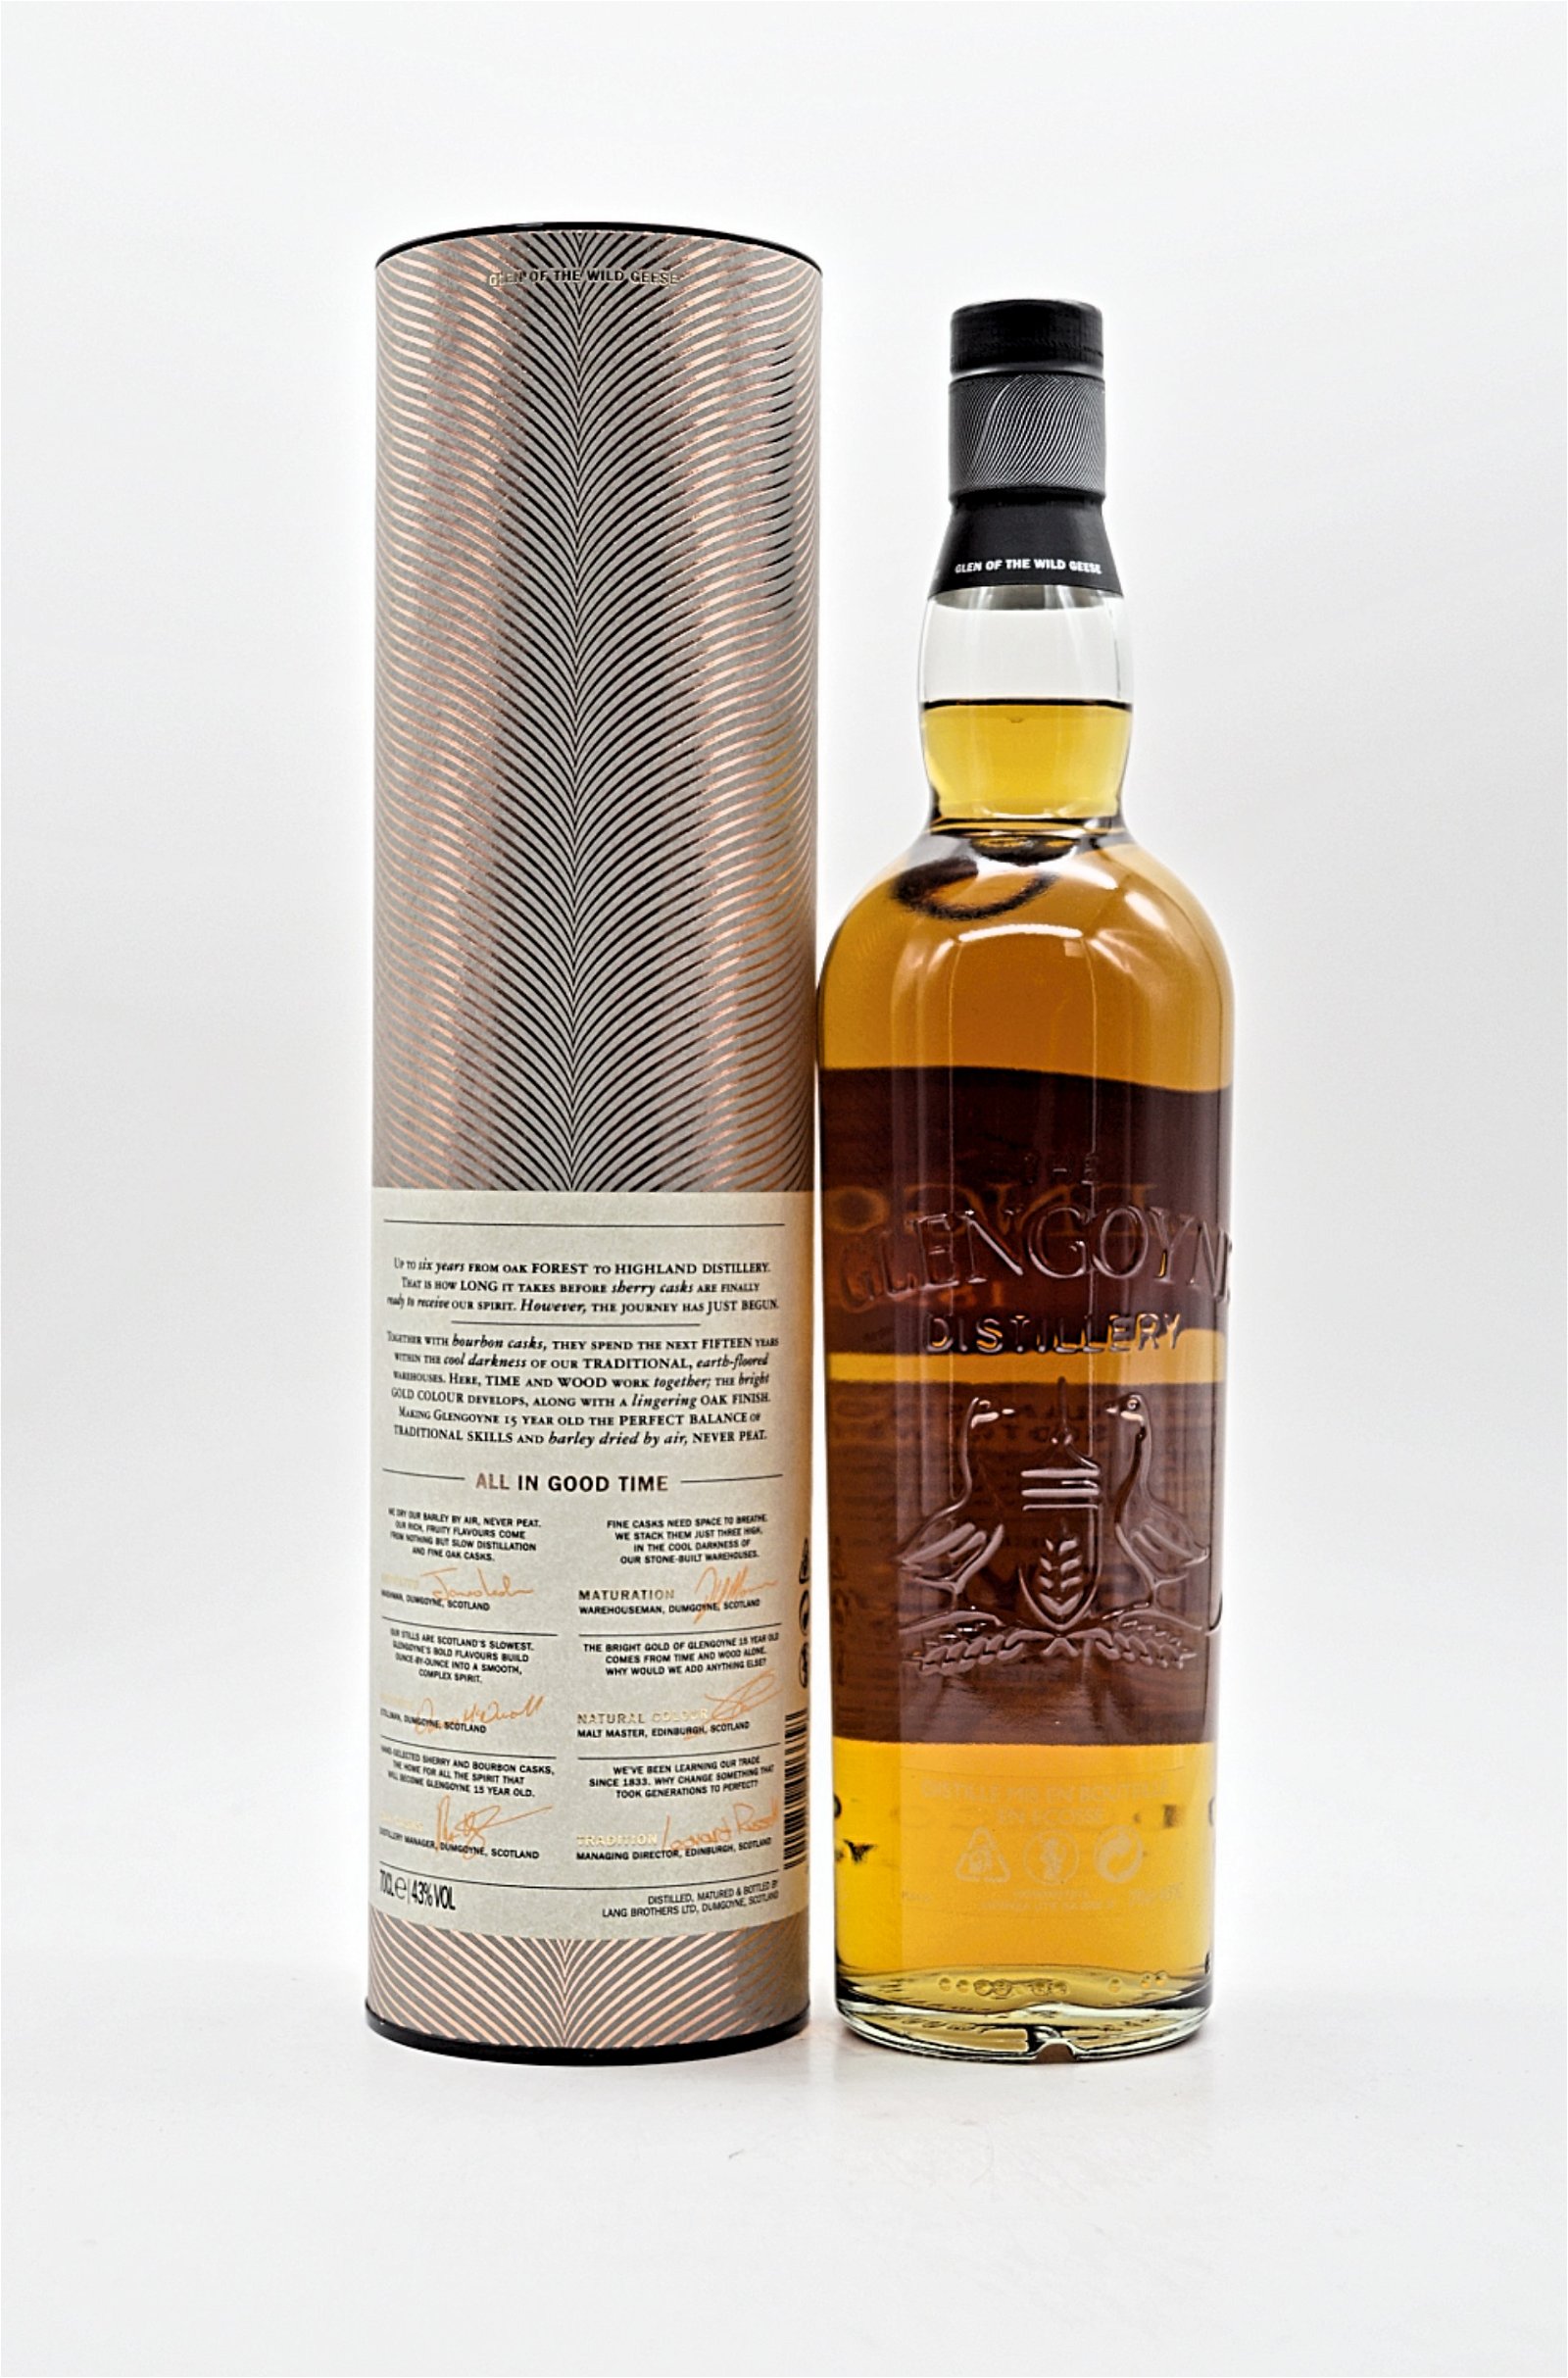 Glengoyne 15 Jahre Highland Single Malt Scotch Whisky